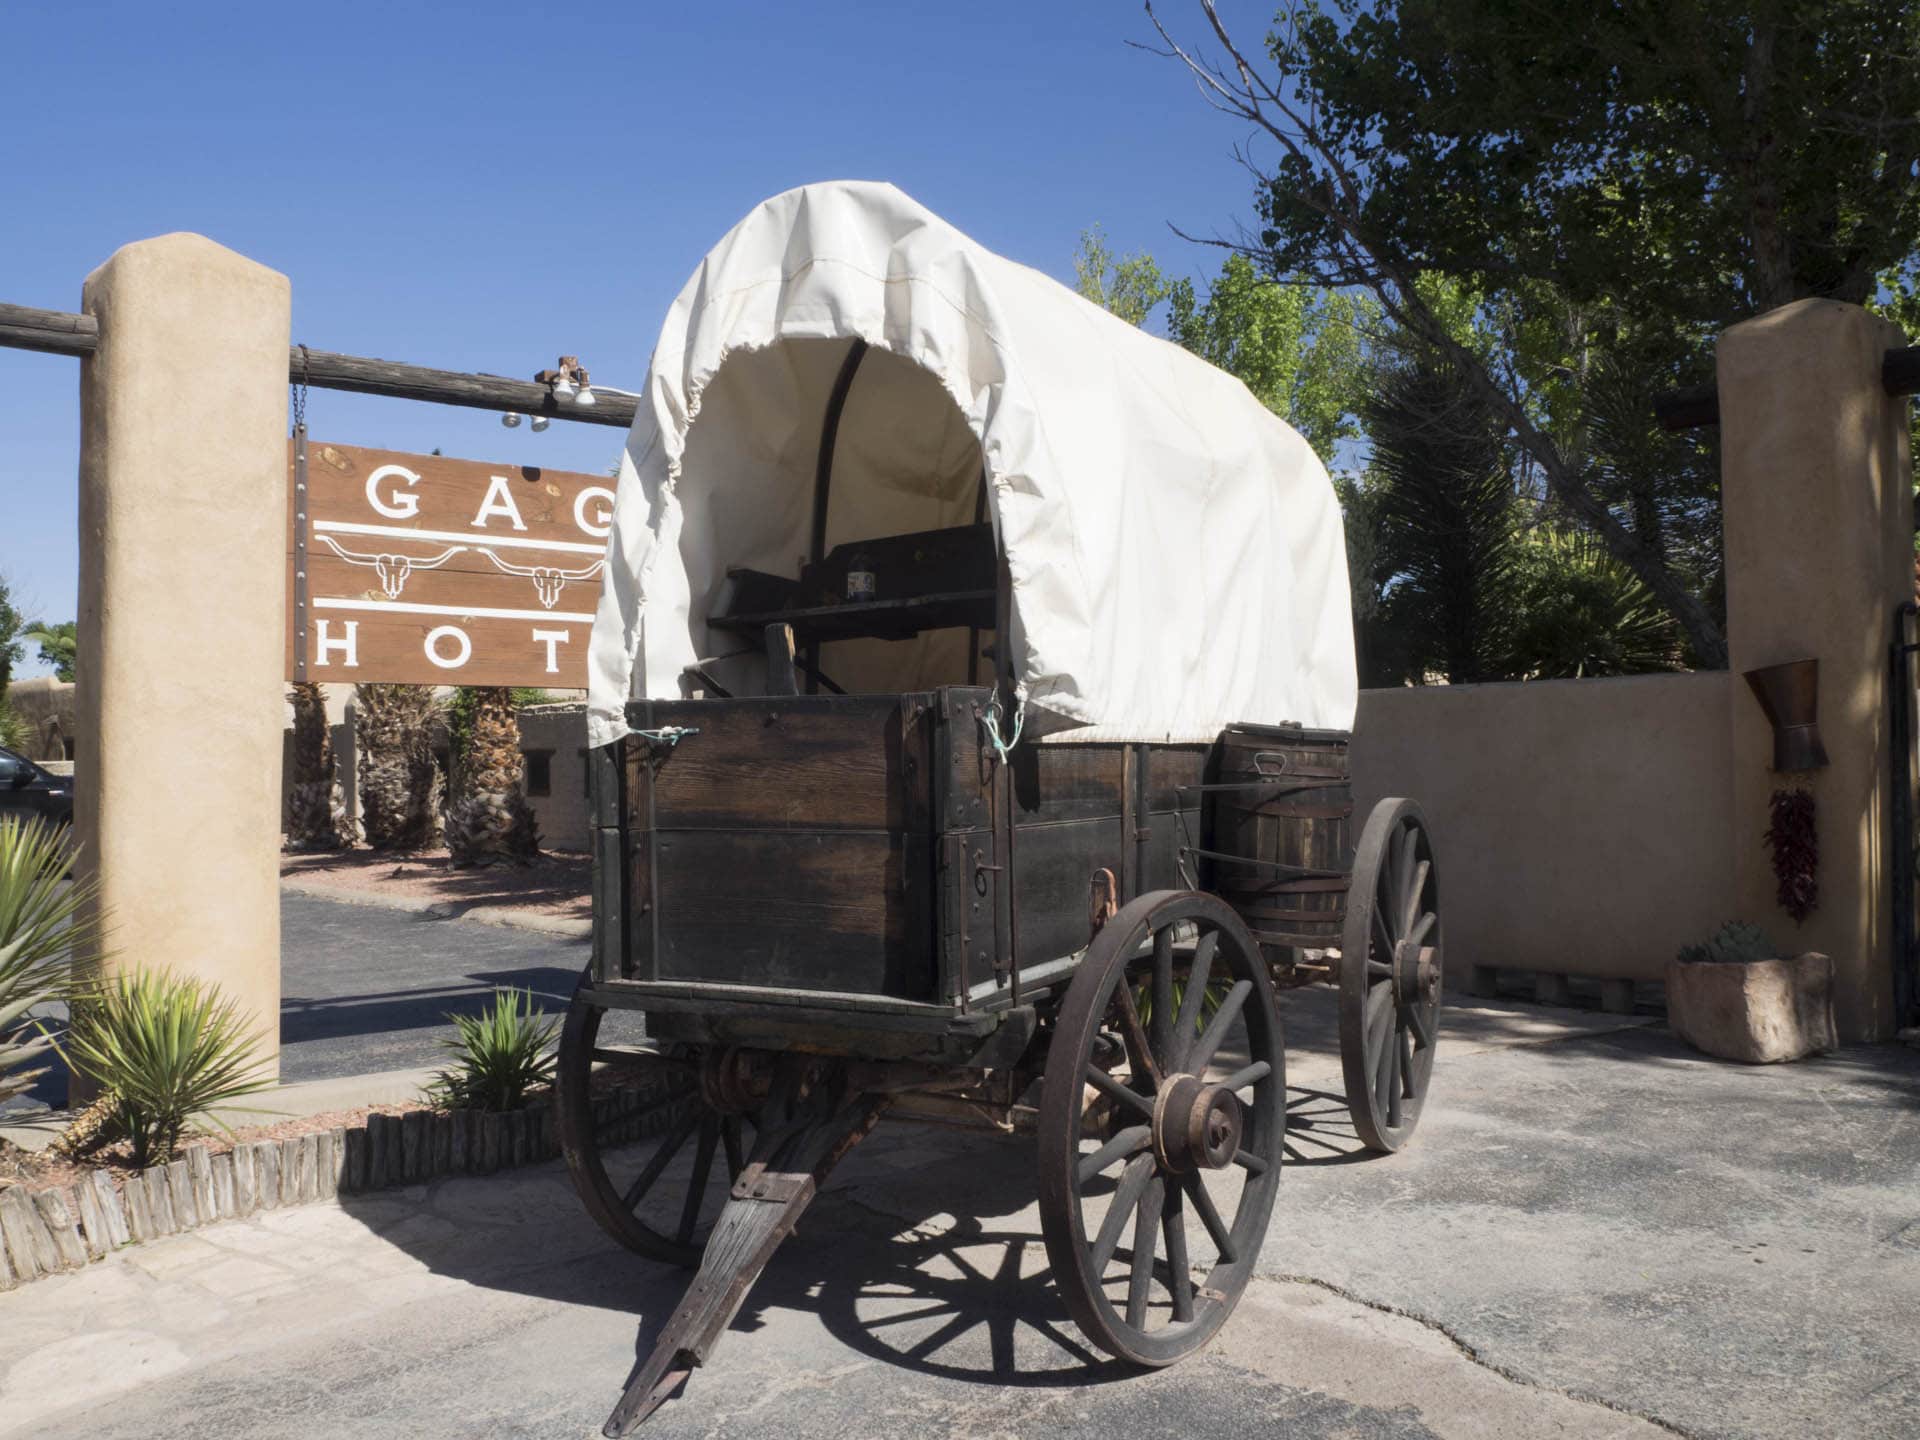 The legendary Gage Hotel in Marathon, Texas